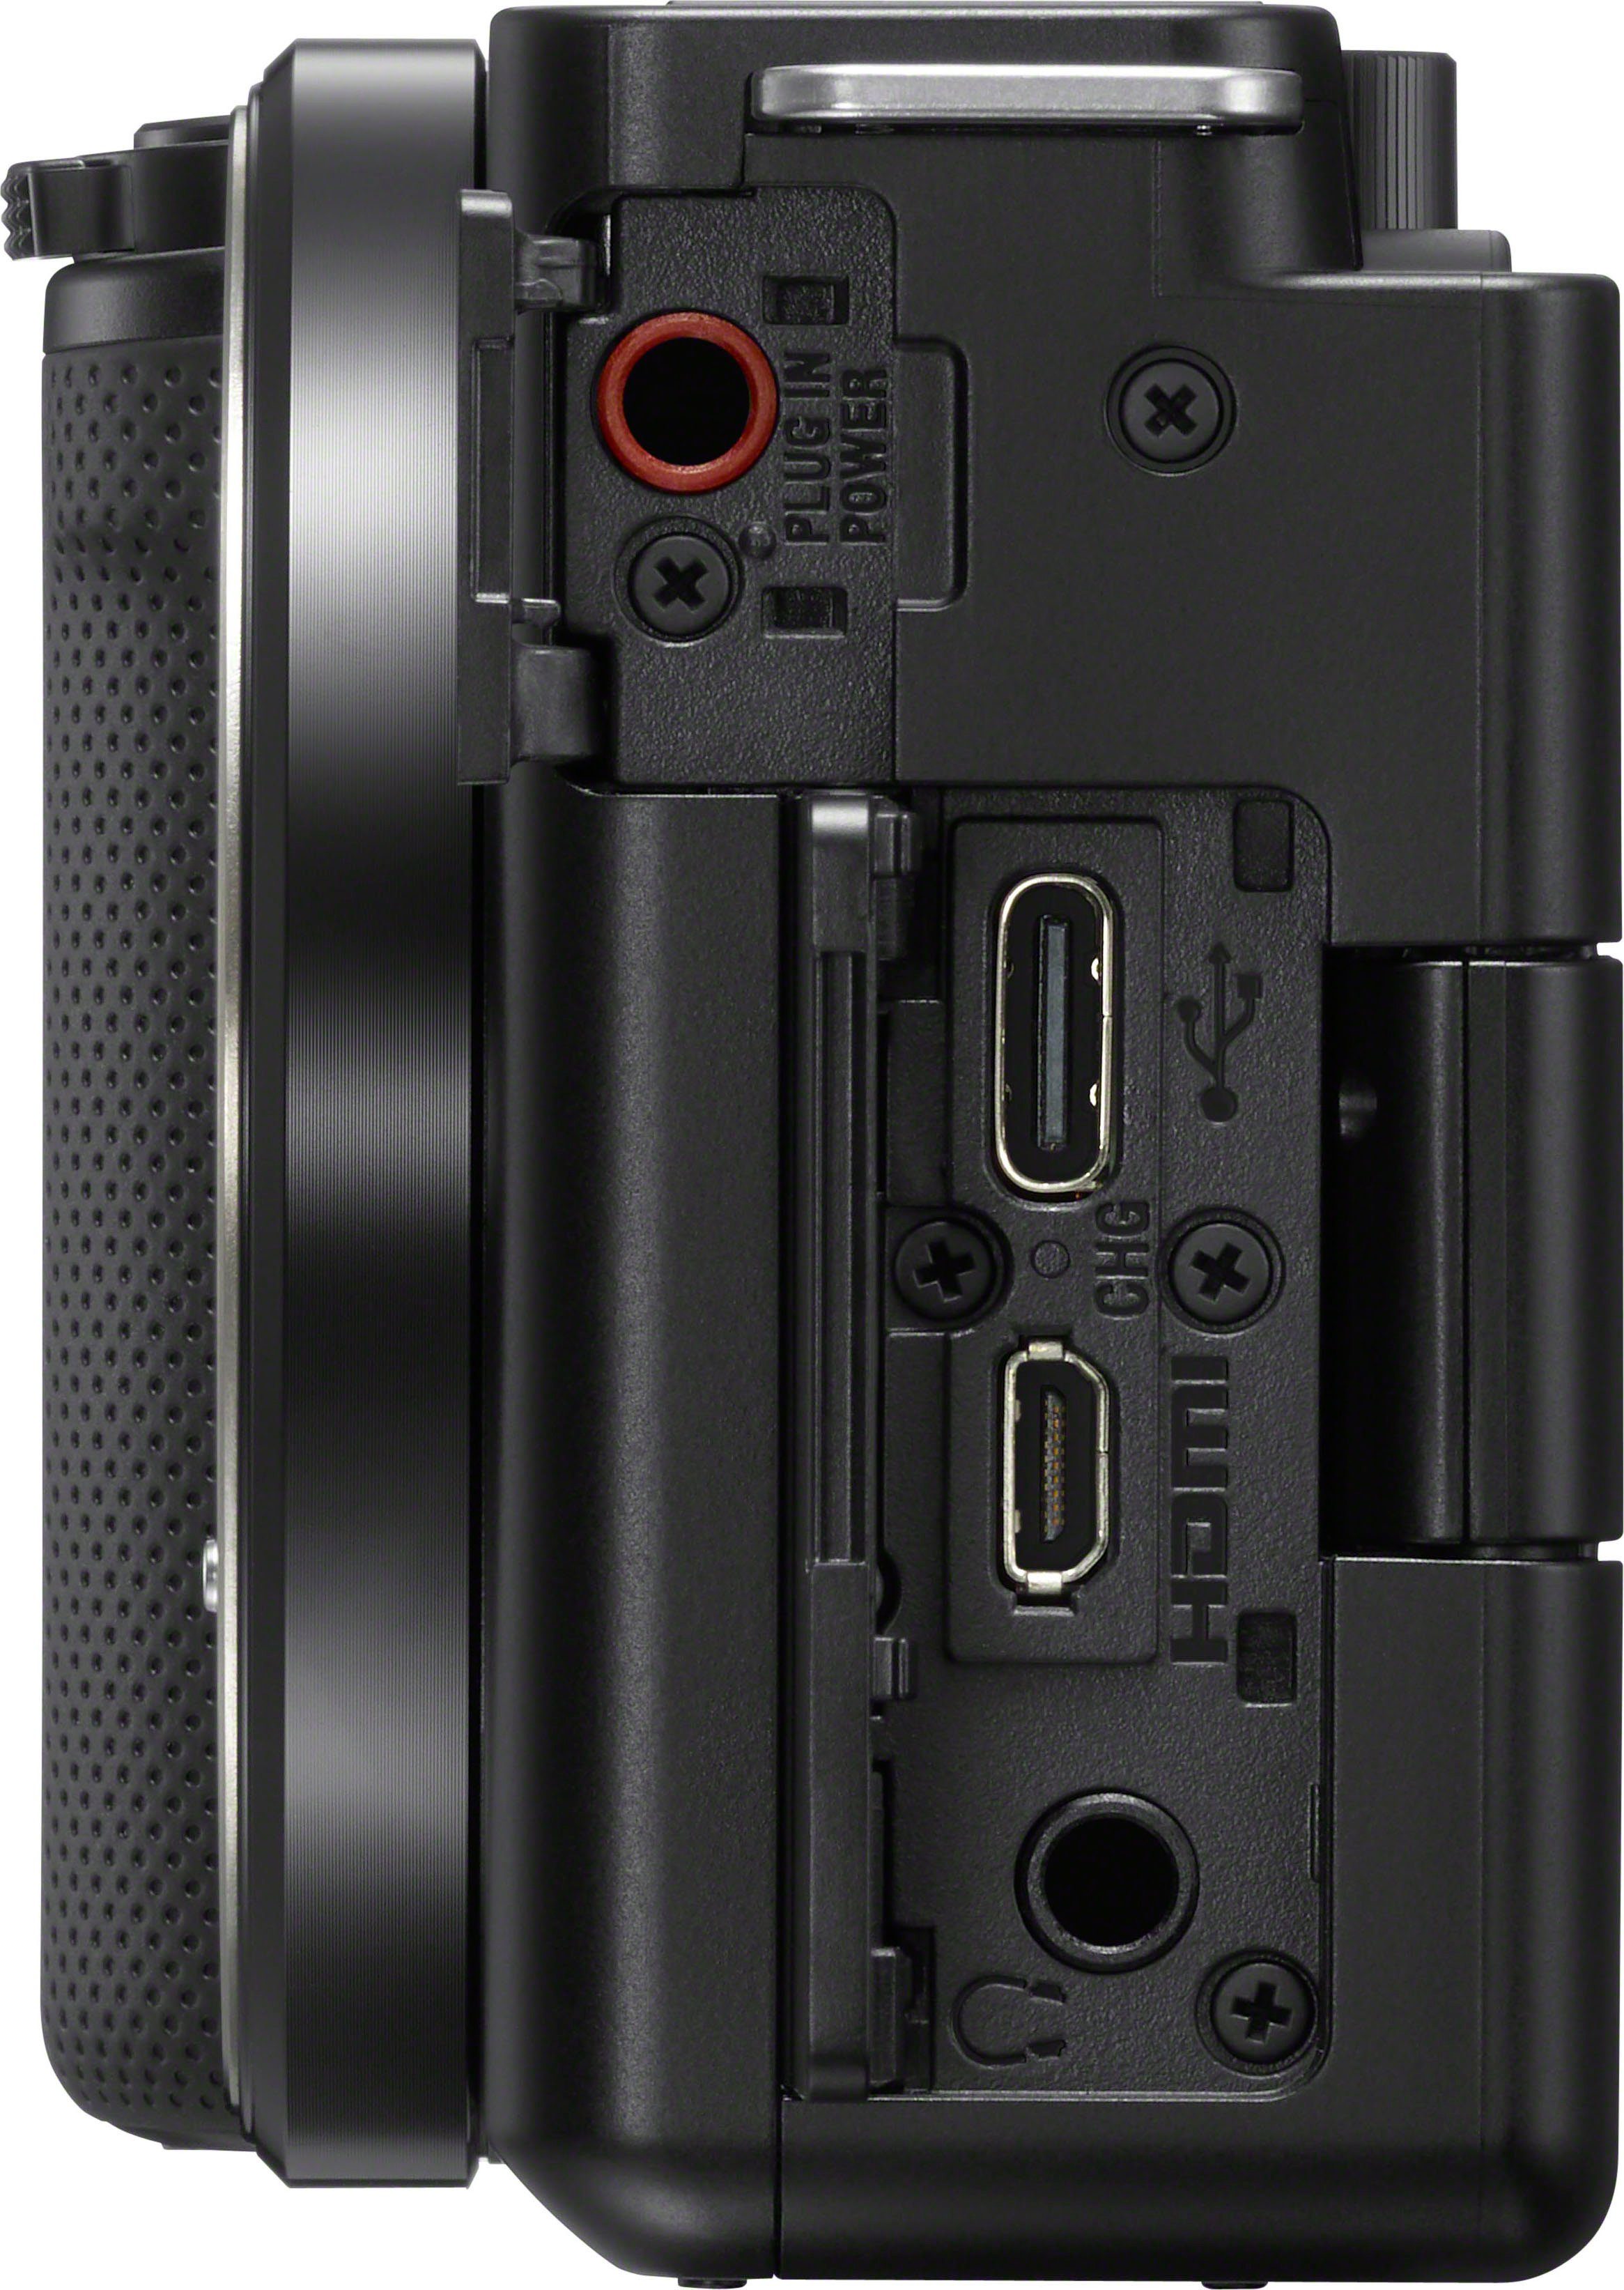 Objektiv) ZV-E10L - 50 F3.5 mit (SELP1650), MP, schwenkbarem Vlog-Kamera Systemkamera 16 Sony Bluetooth, OSS (WiFi), inkl. SEL16-50 Display - 24,2 5.6 PZ (E WLAN mm